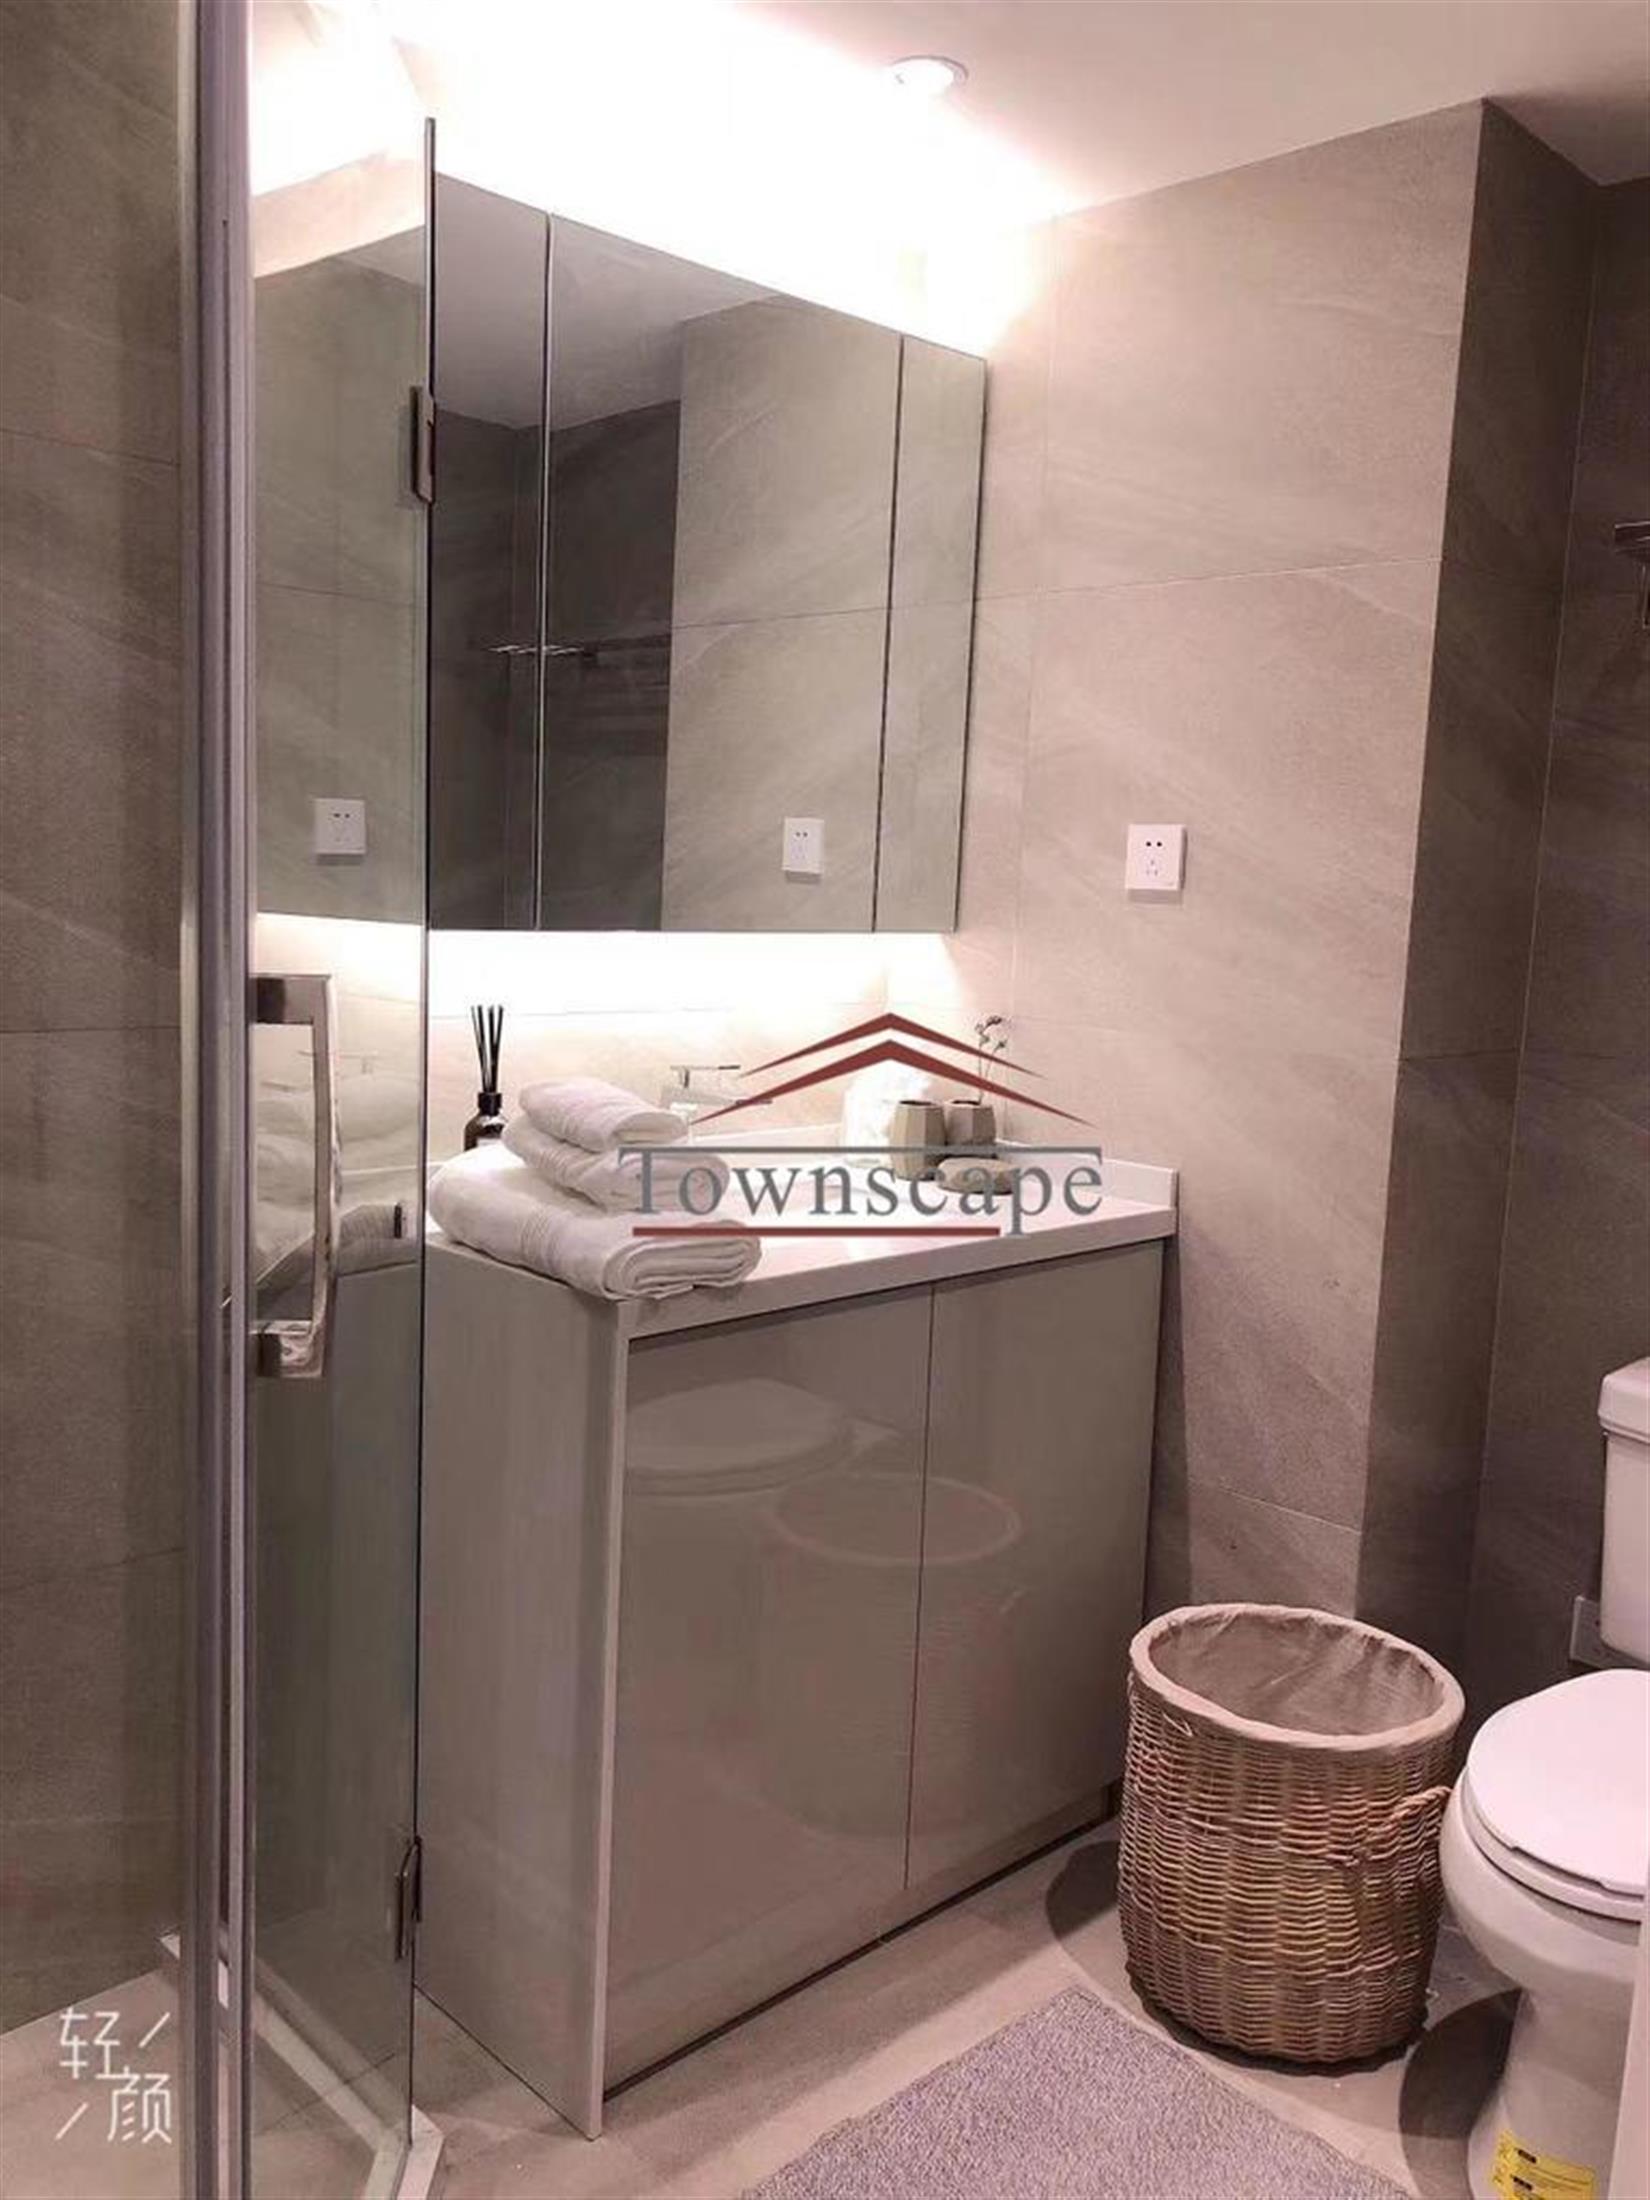 clean bathroom New Gorgeous Spacious Bright Apartment for Rent in Quiet FFC Shanghai